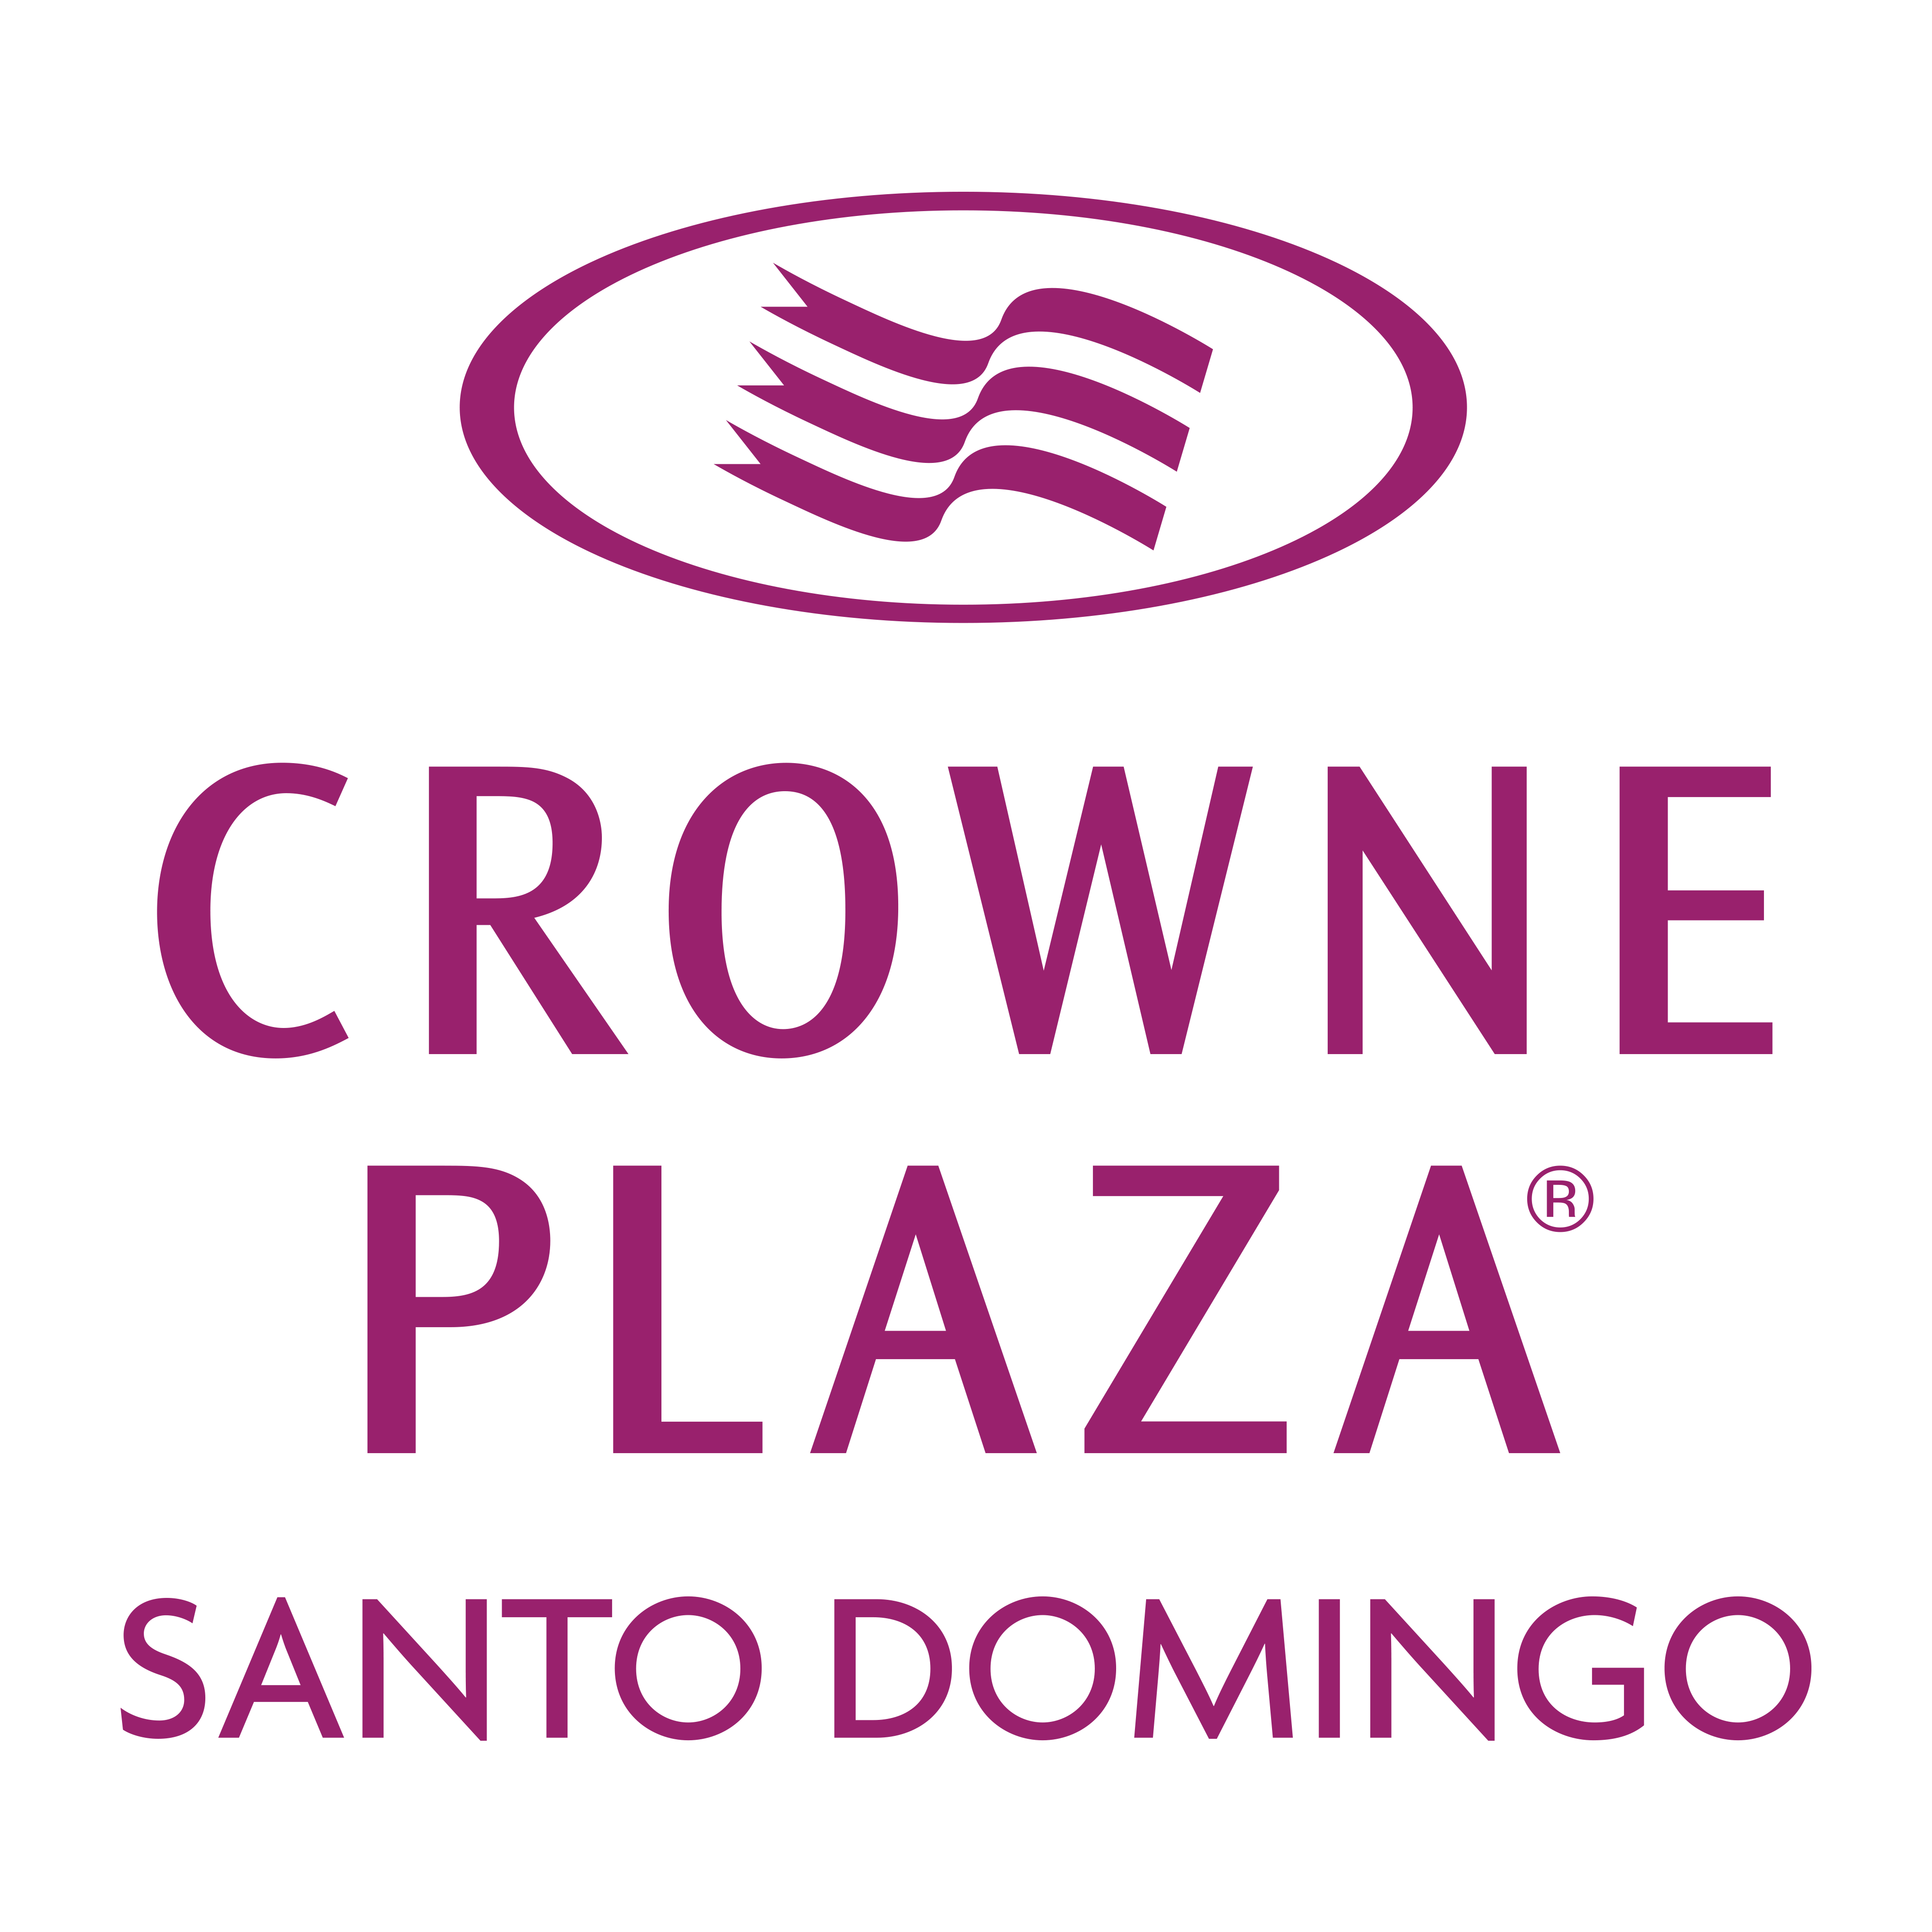 Crowne Plaza SD